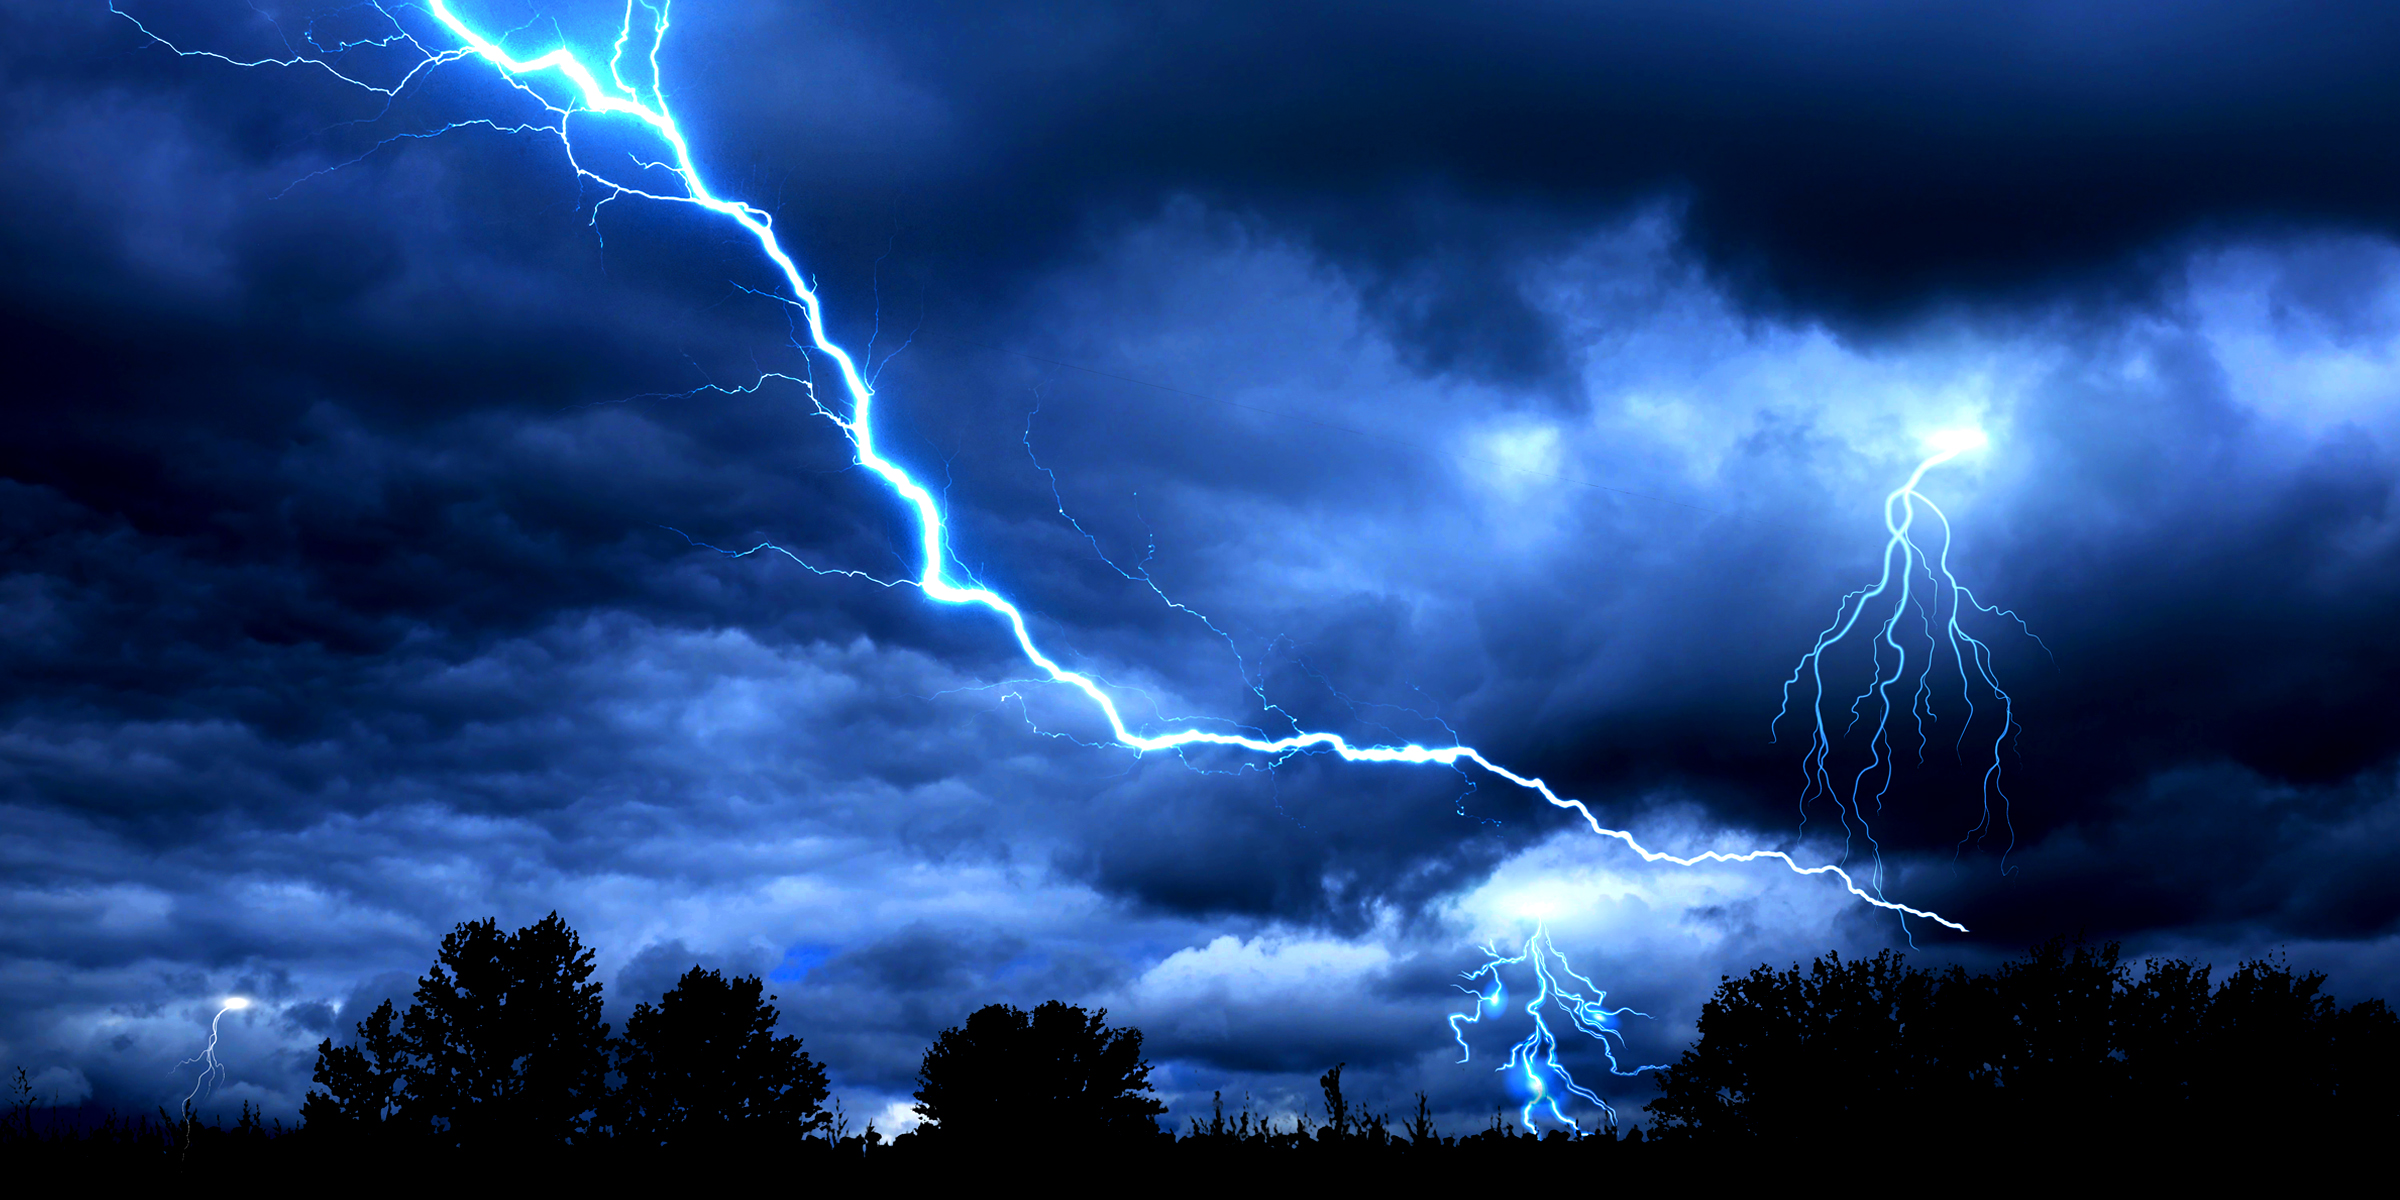 A thunderstorm with lightning | Source: Freepik